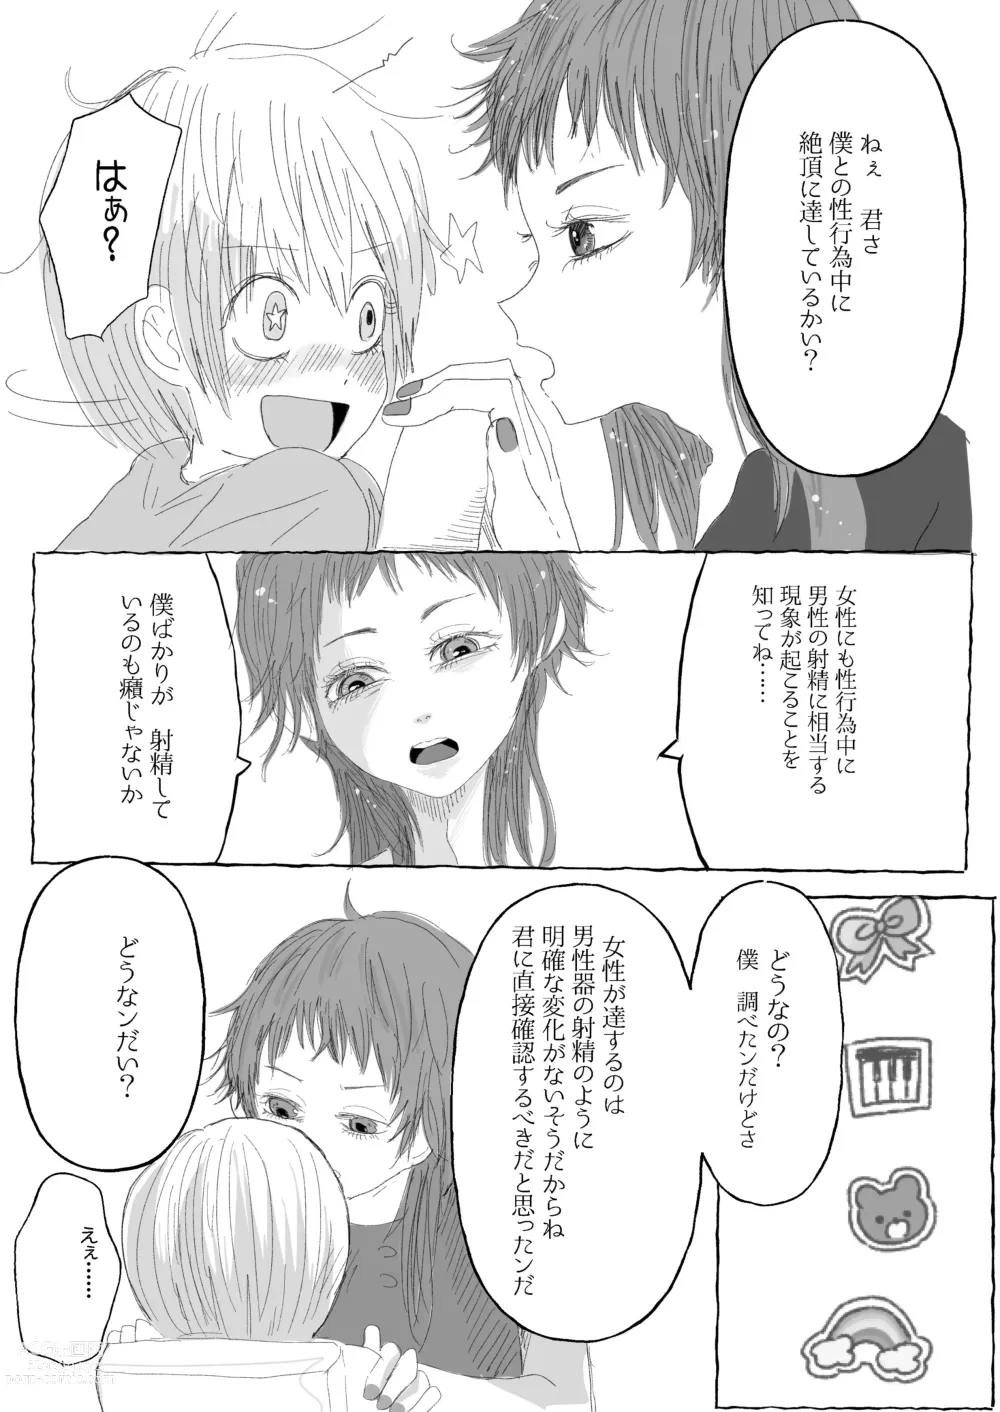 Page 4 of doujinshi Raki Shu Ero Manga